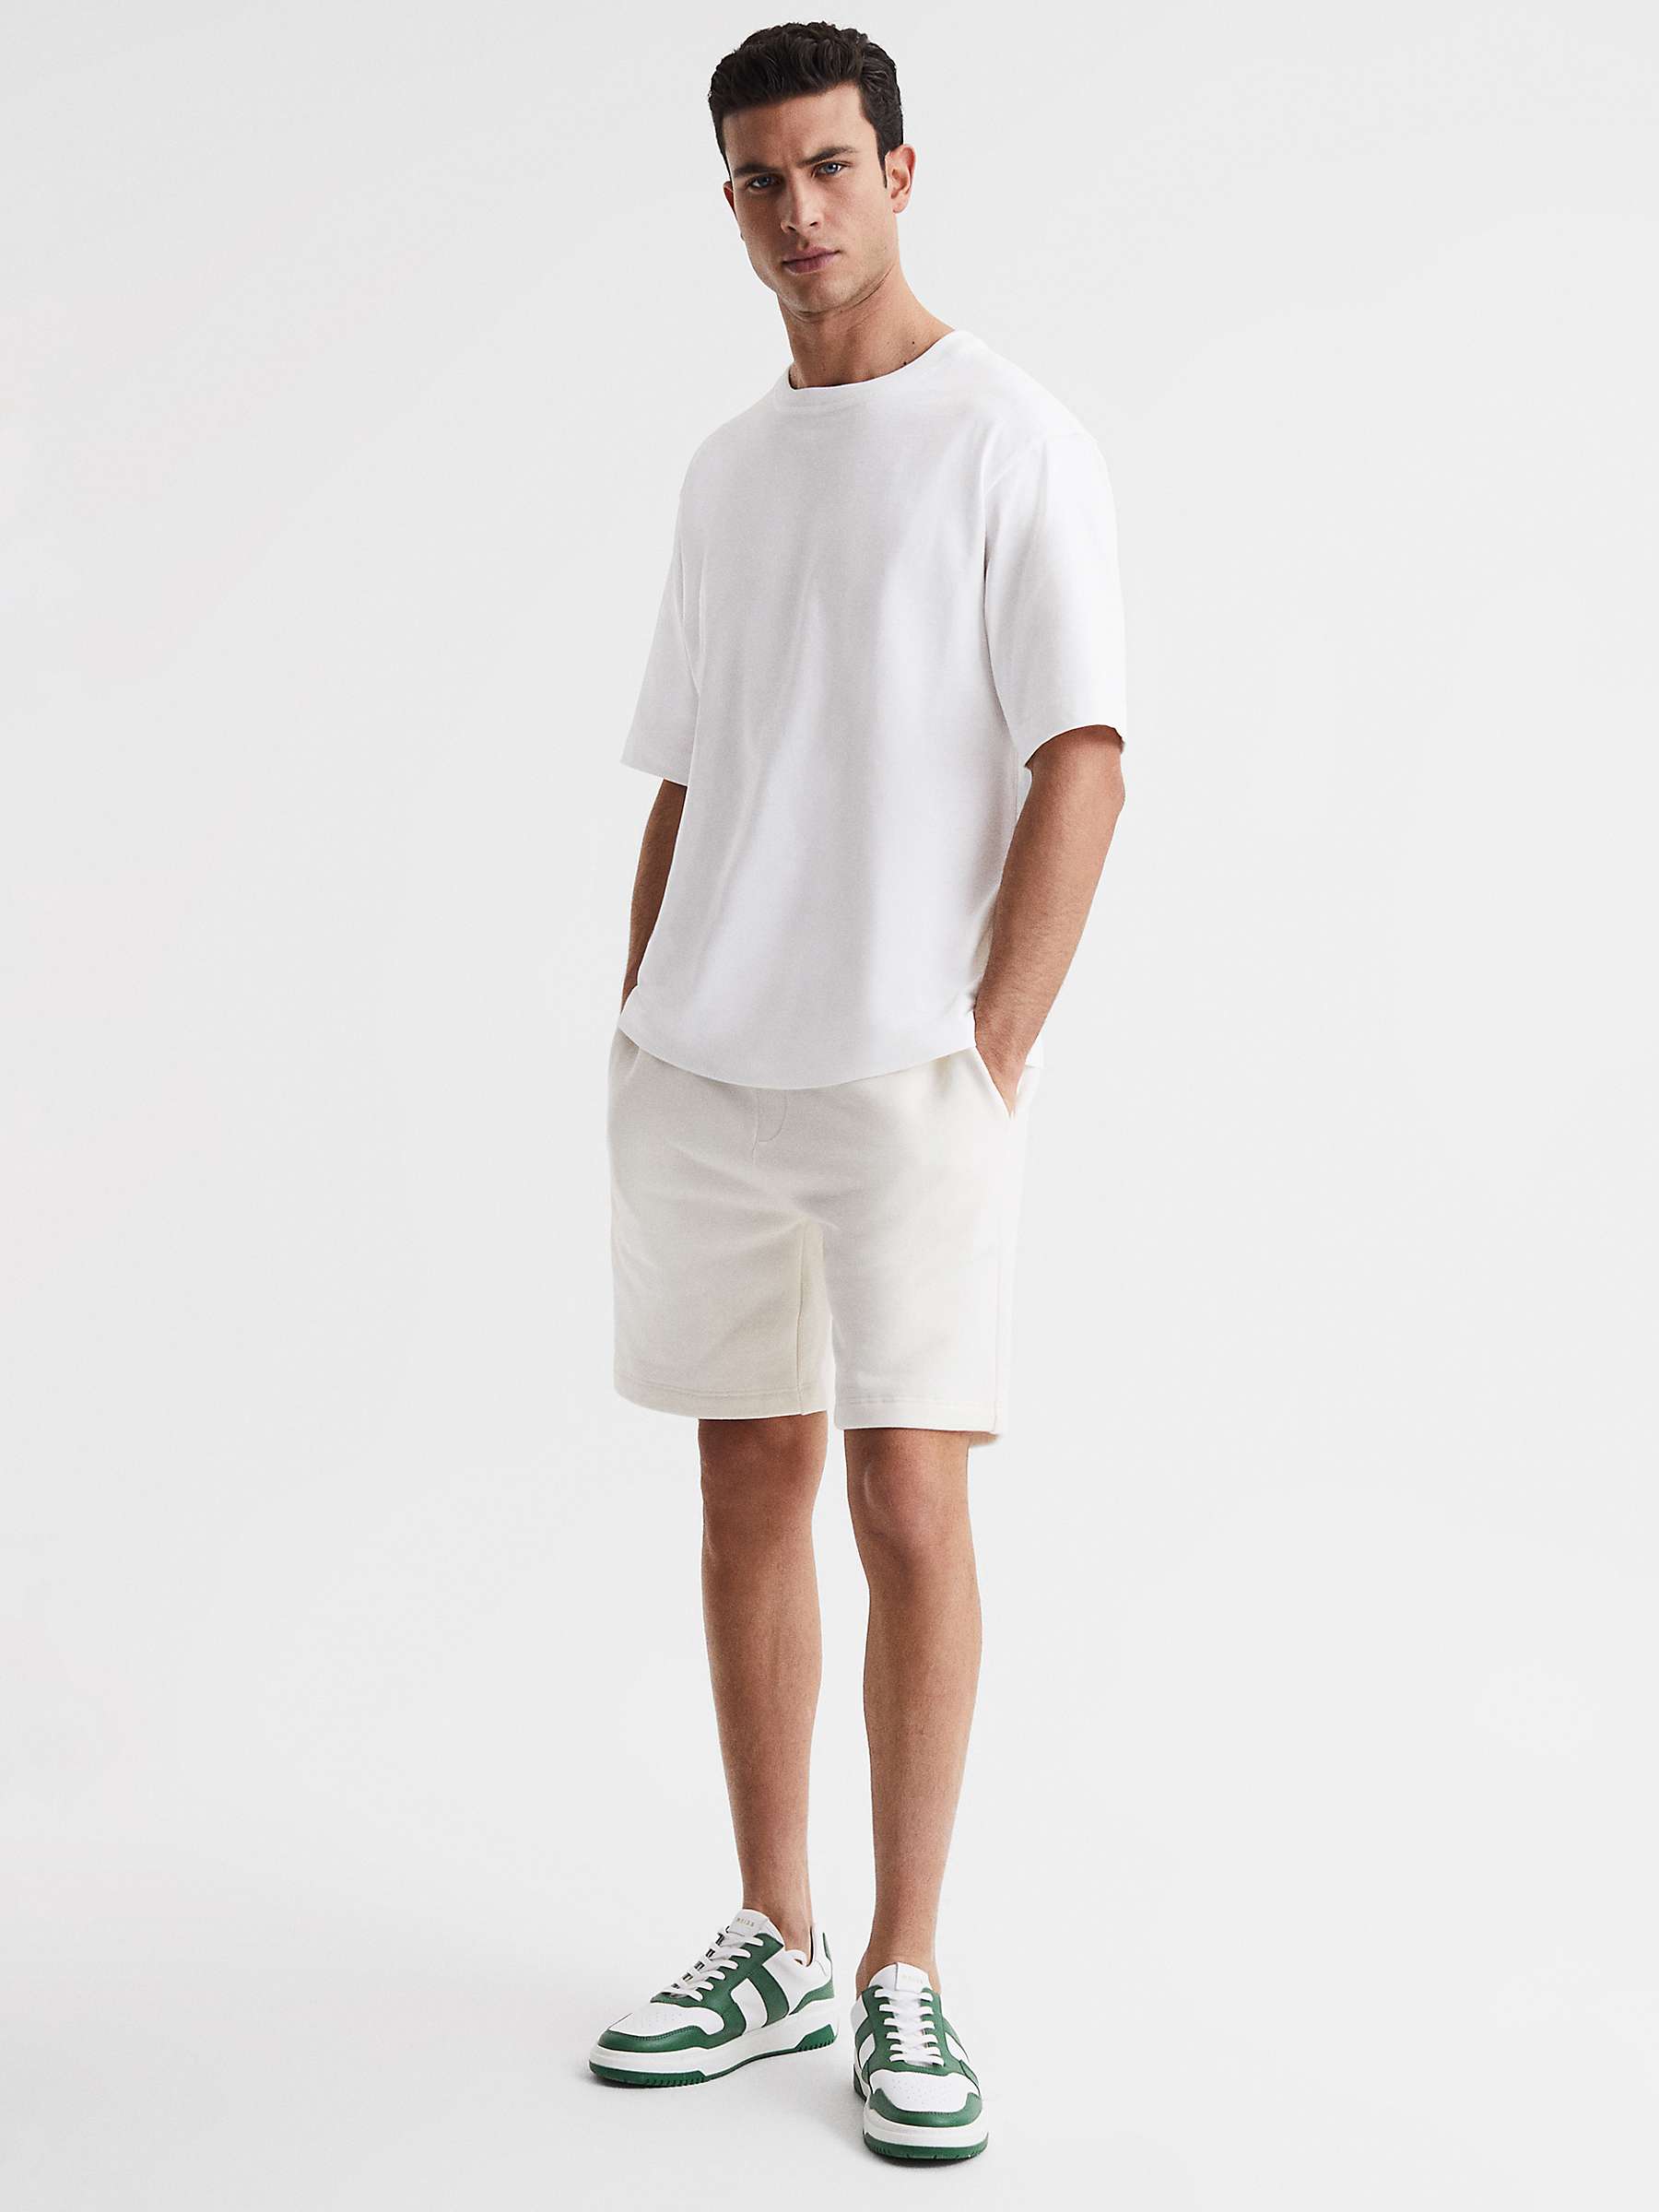 Reiss Tate Cotton Crew Neck T-Shirt, White at John Lewis & Partners